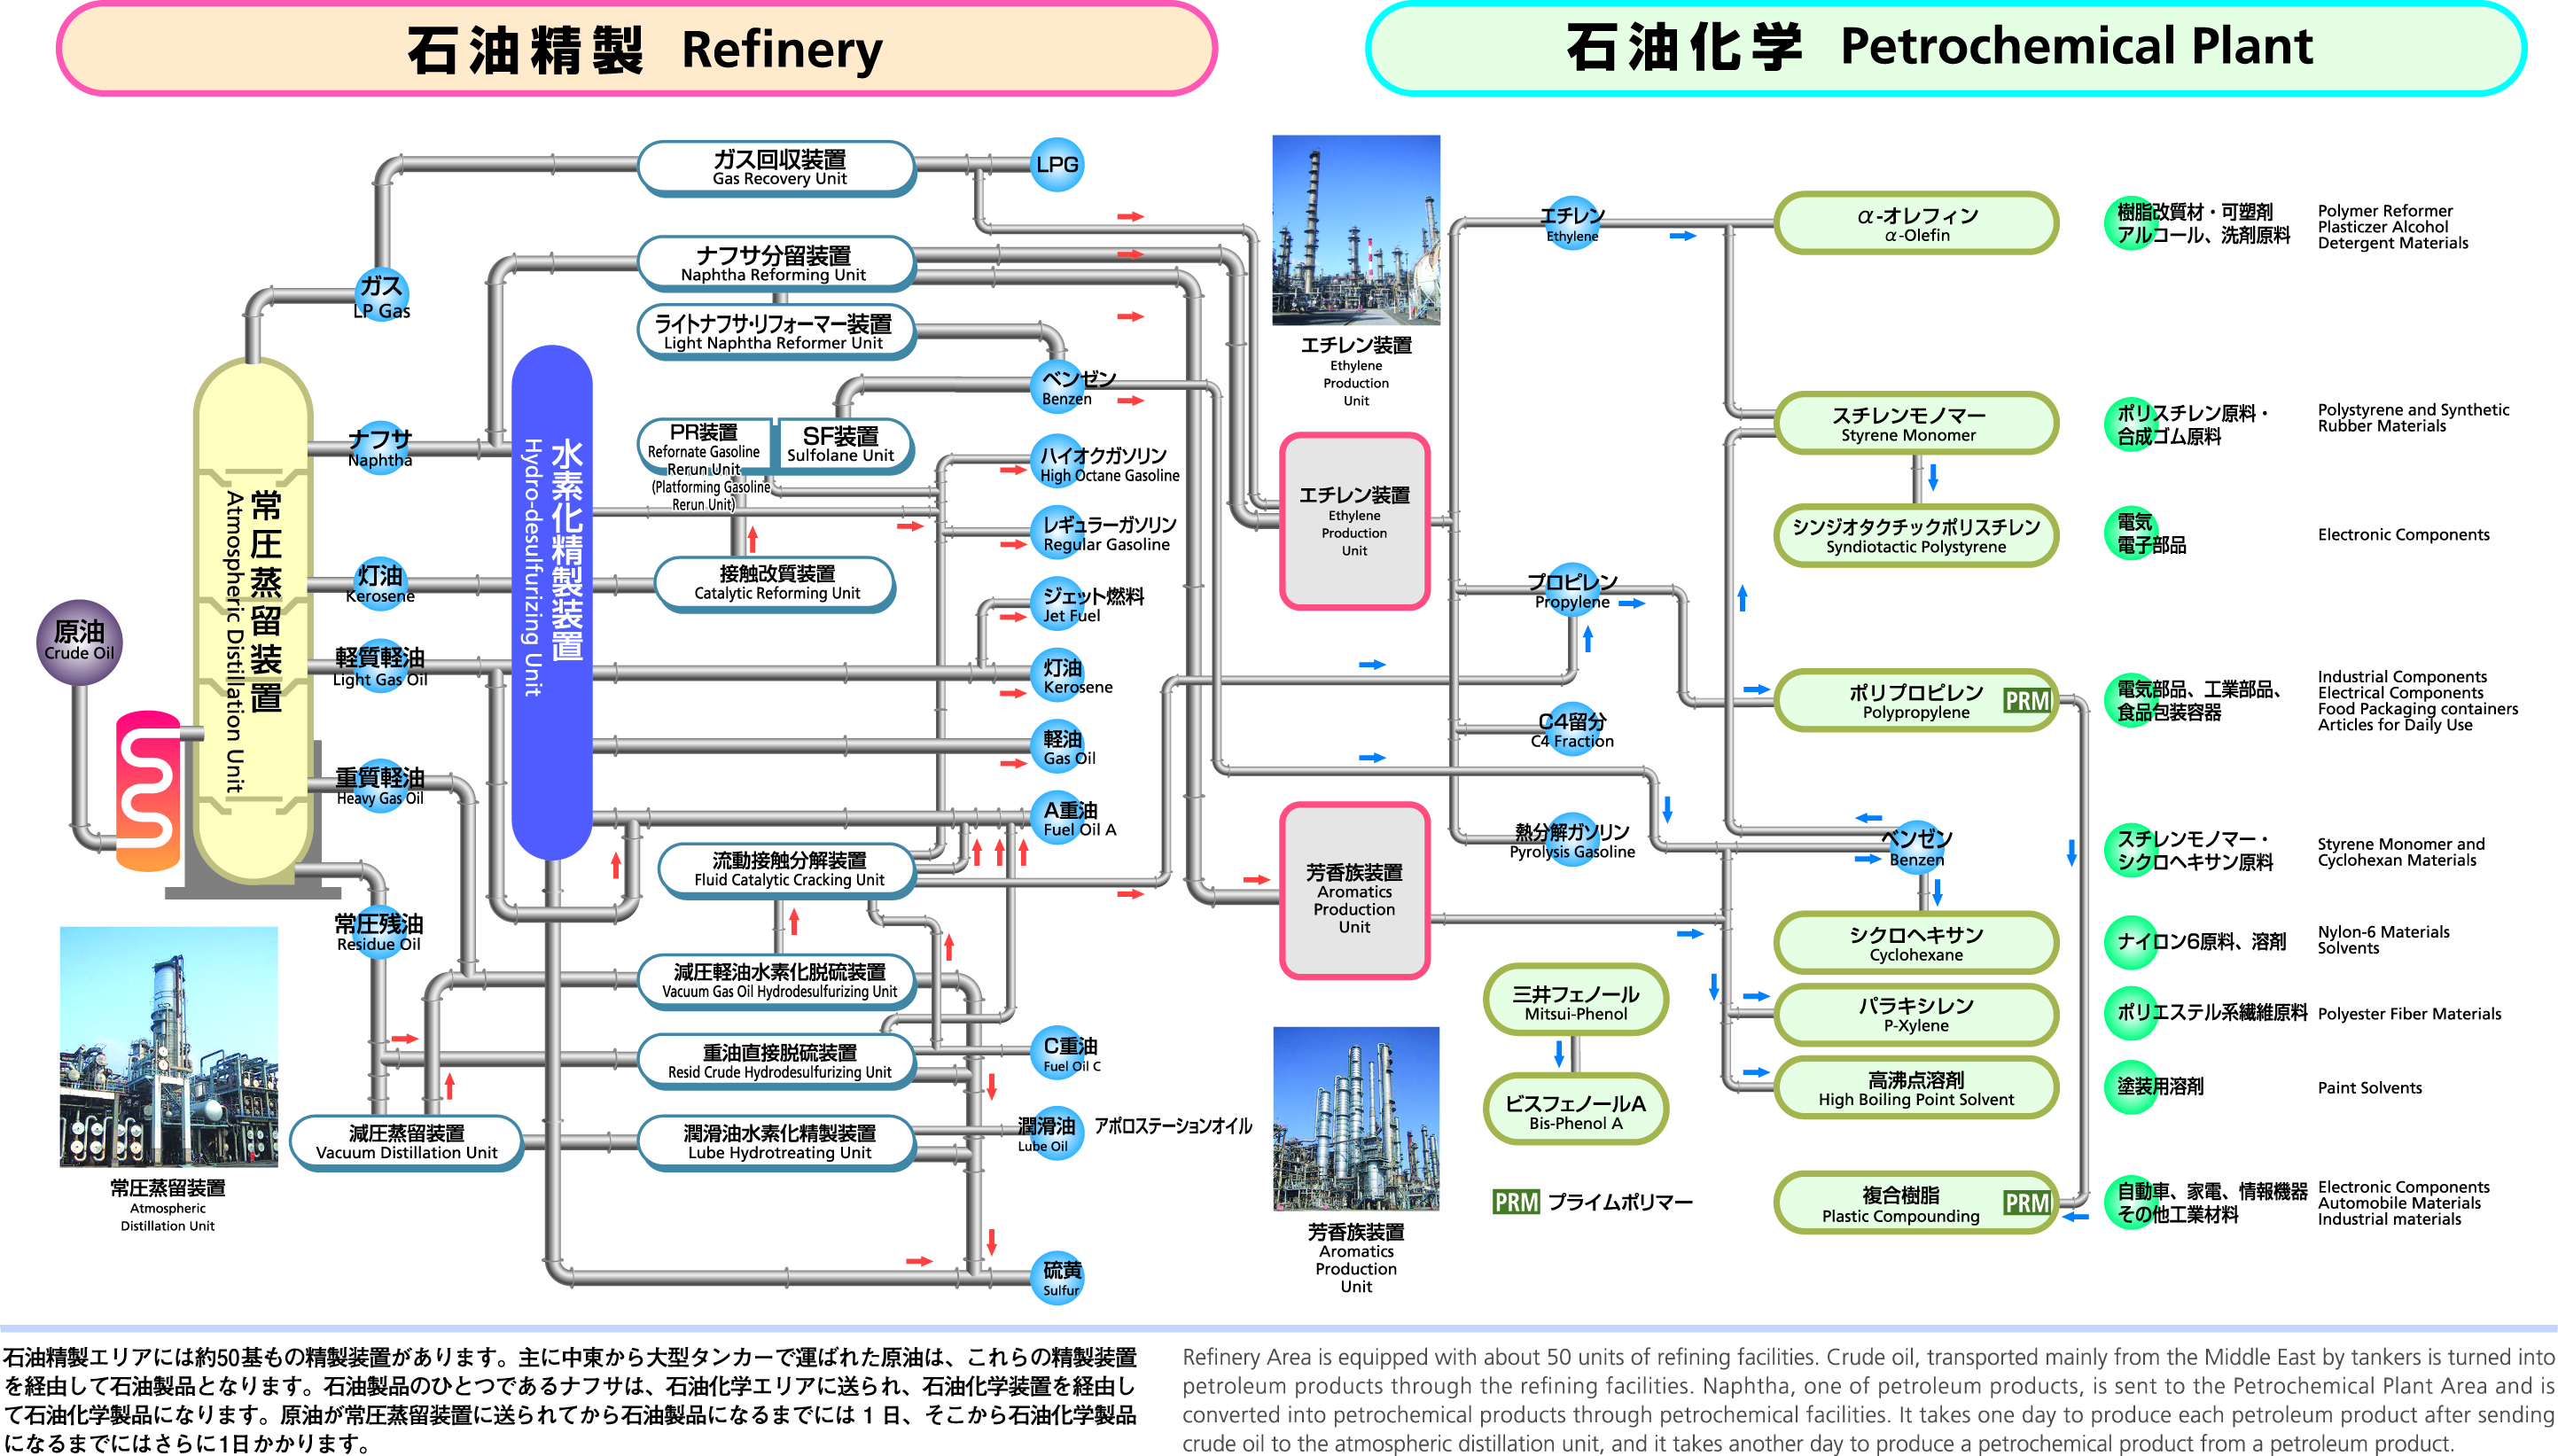 Chiba Complex manufacturing flow